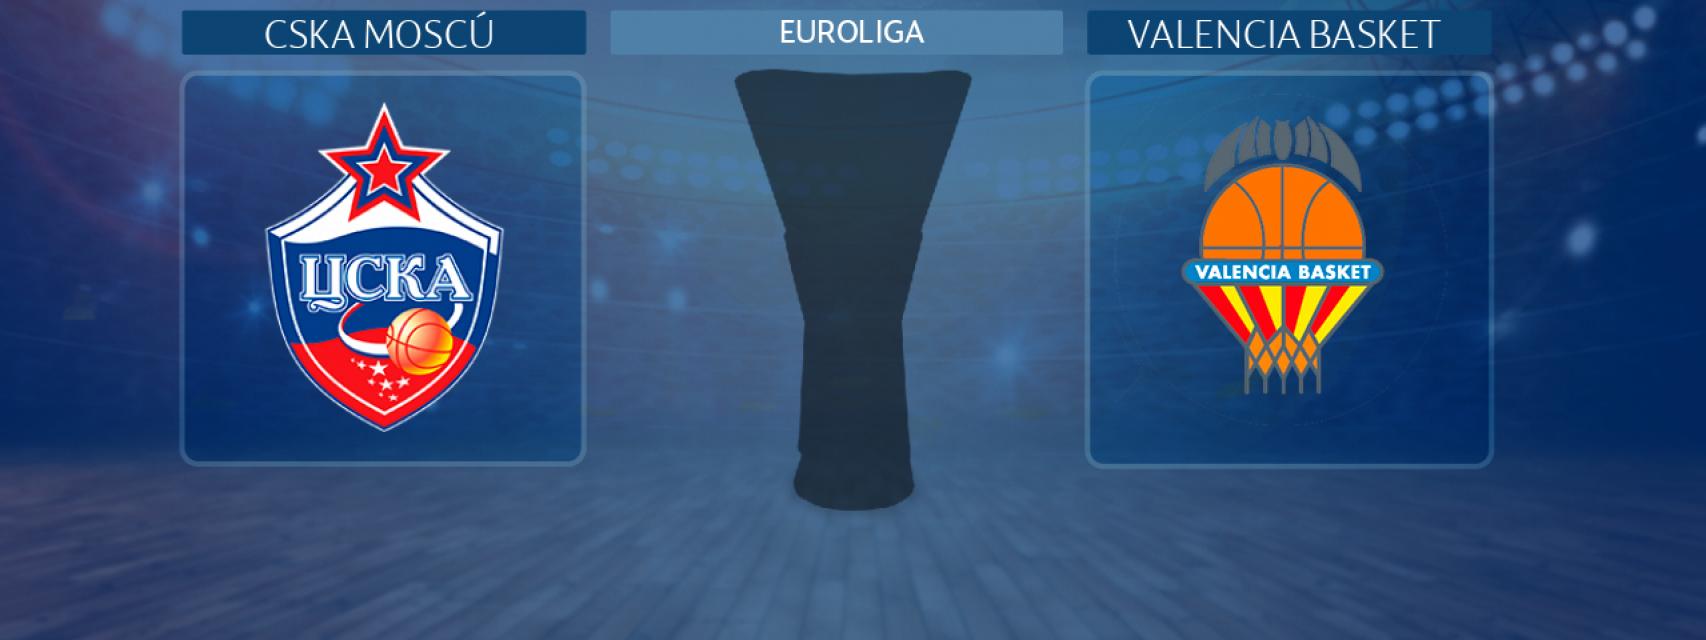 CSKA Moscú - Valencia Basket, partido de la Euroliga